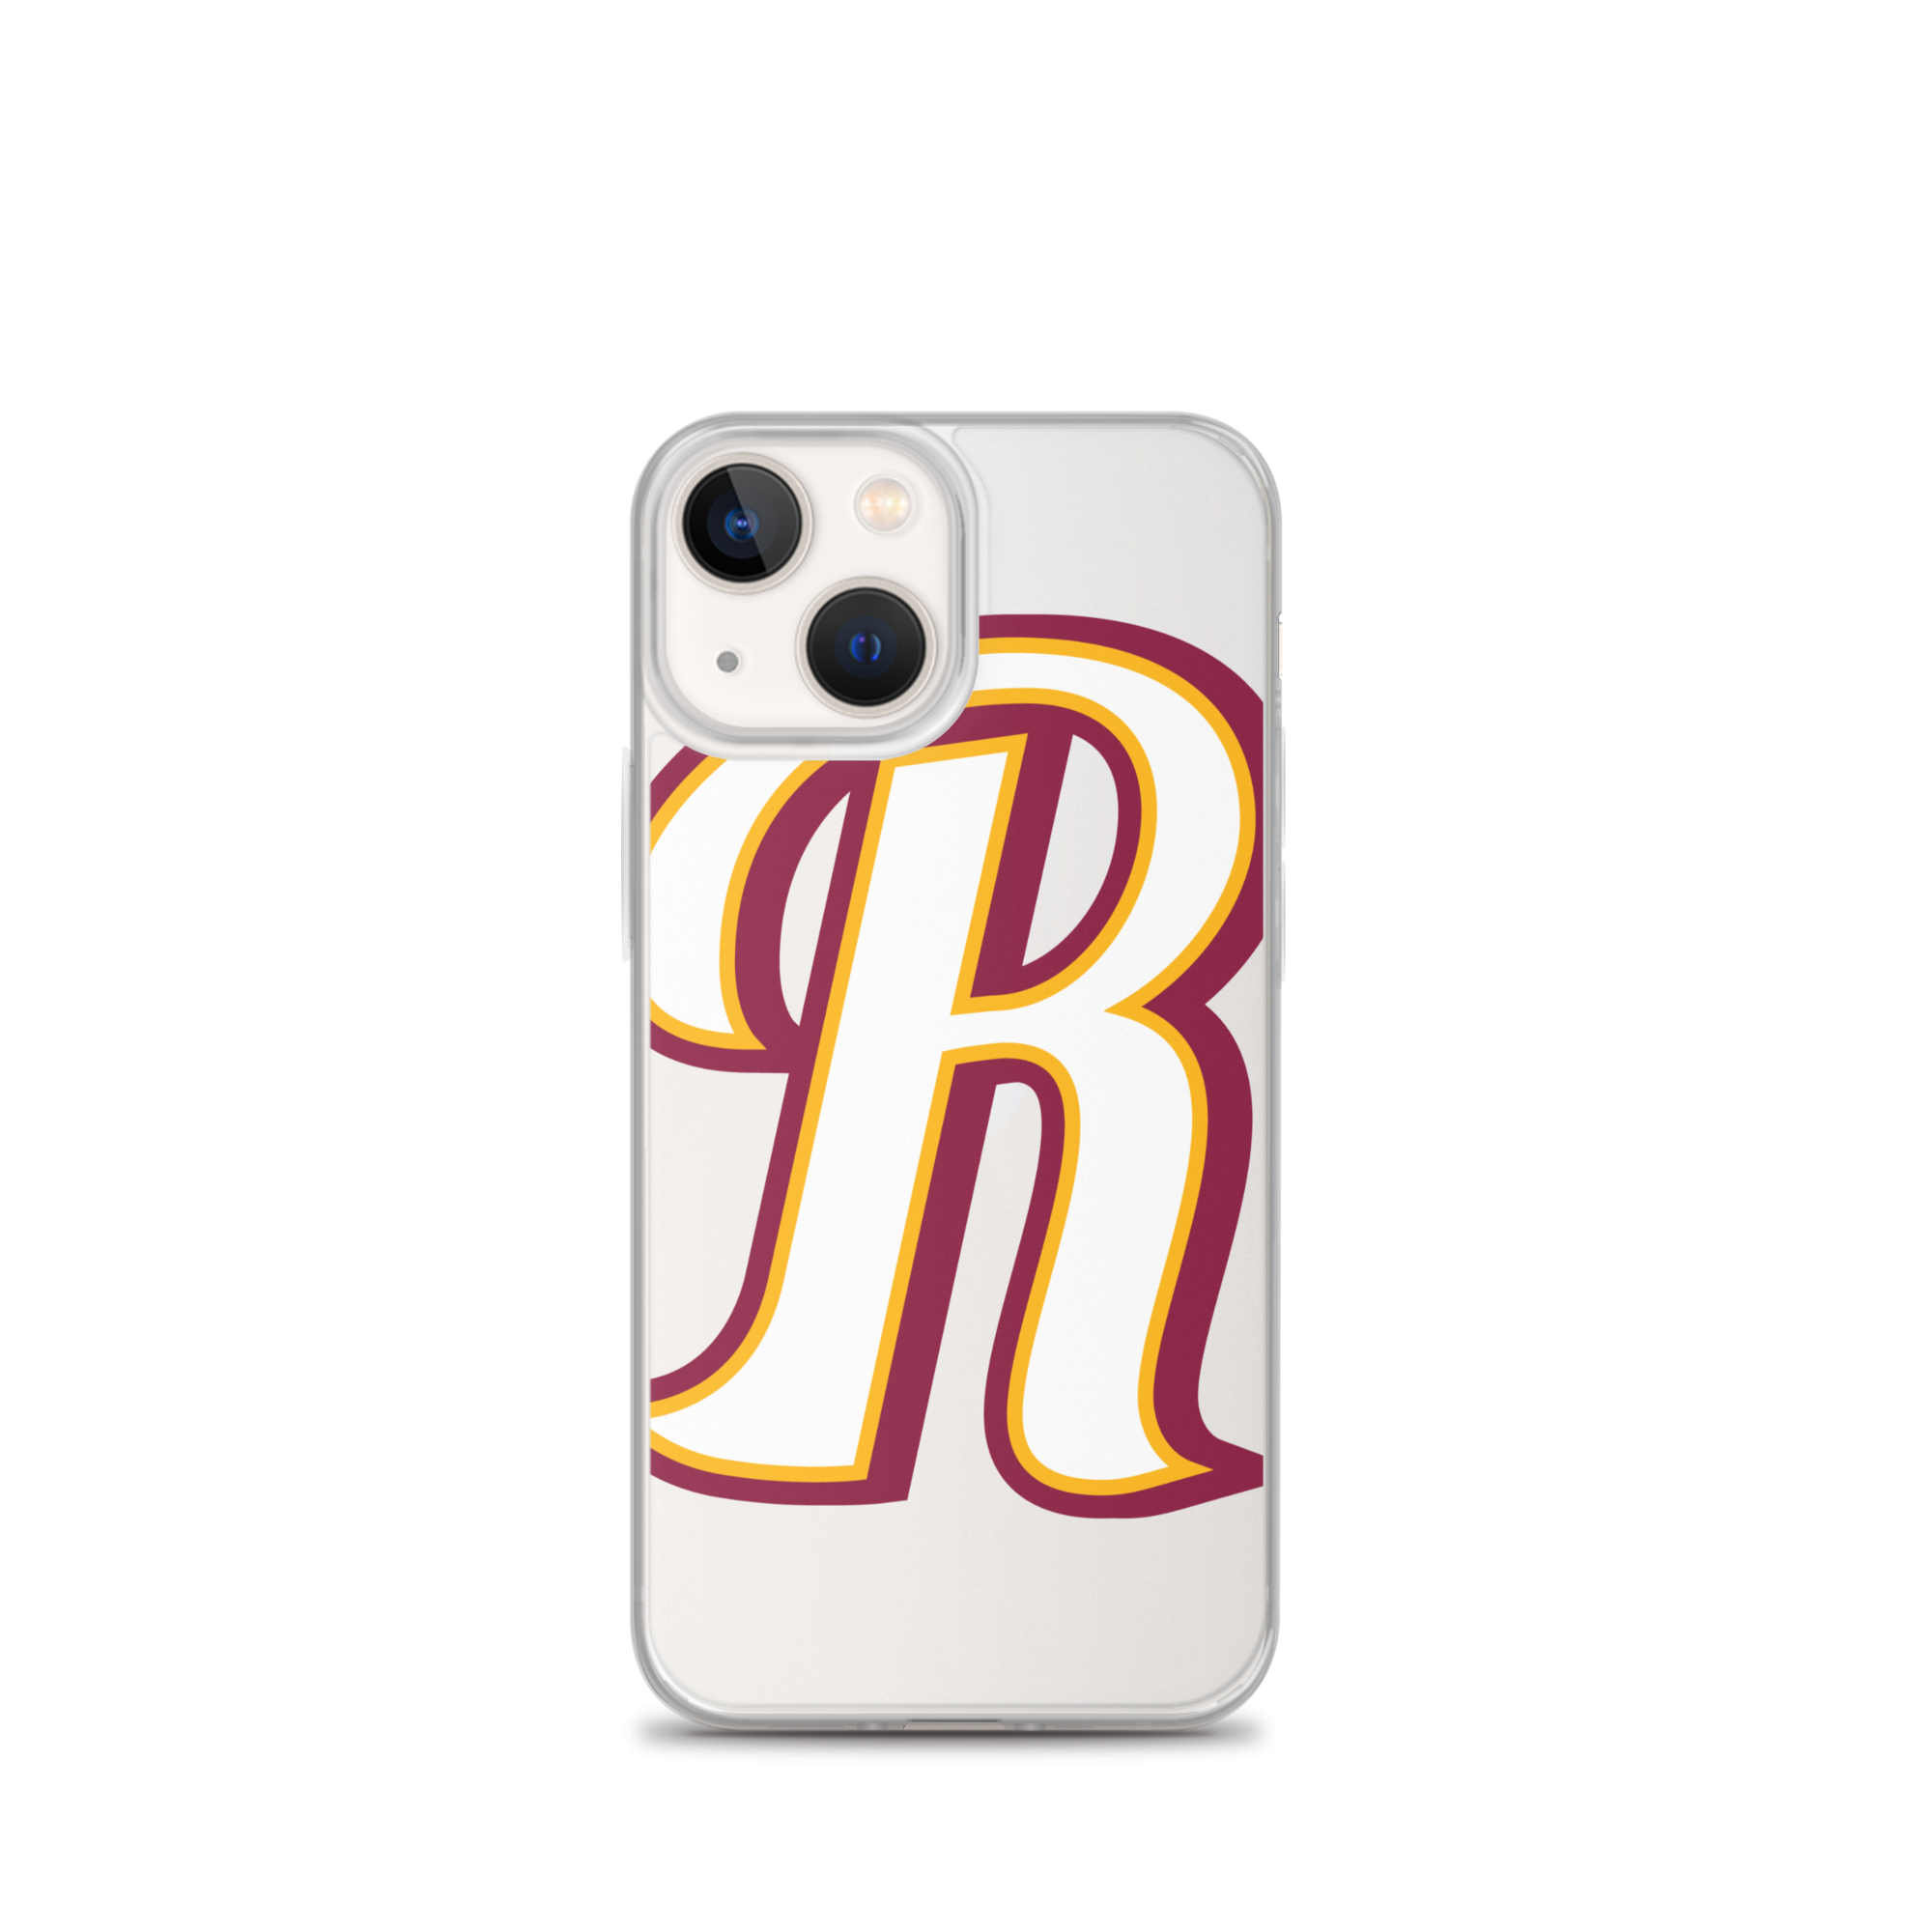 Redmond iPhone Cases